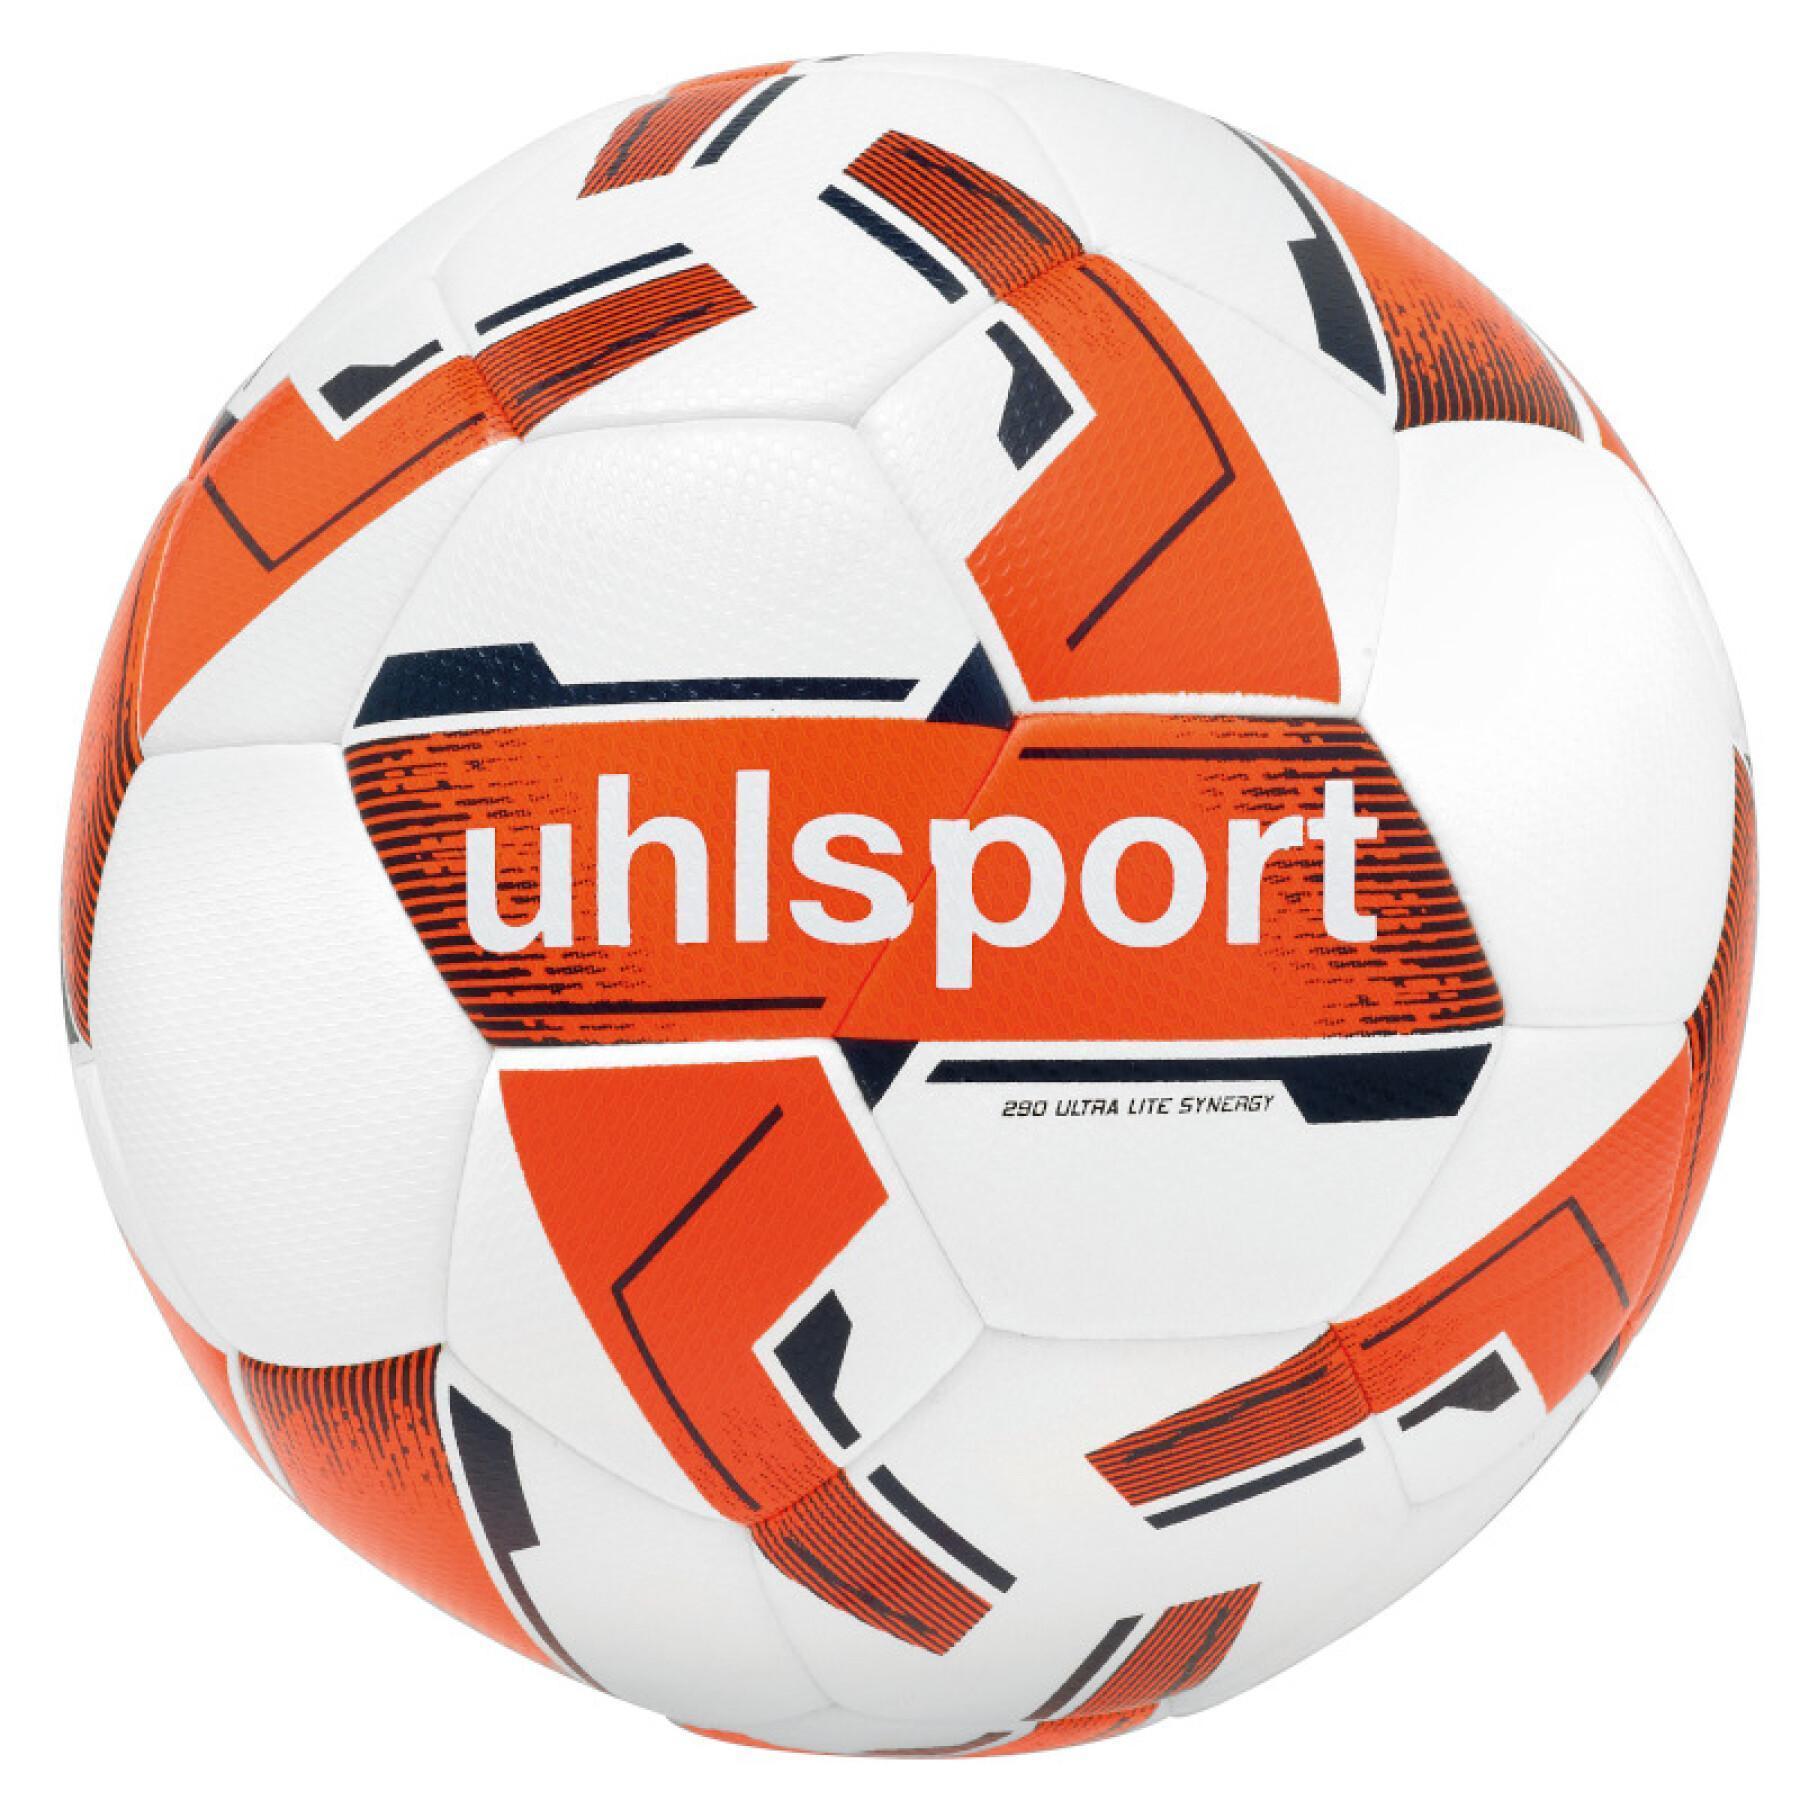 Palla per bambini Uhlsport 290 ultra lite synergy